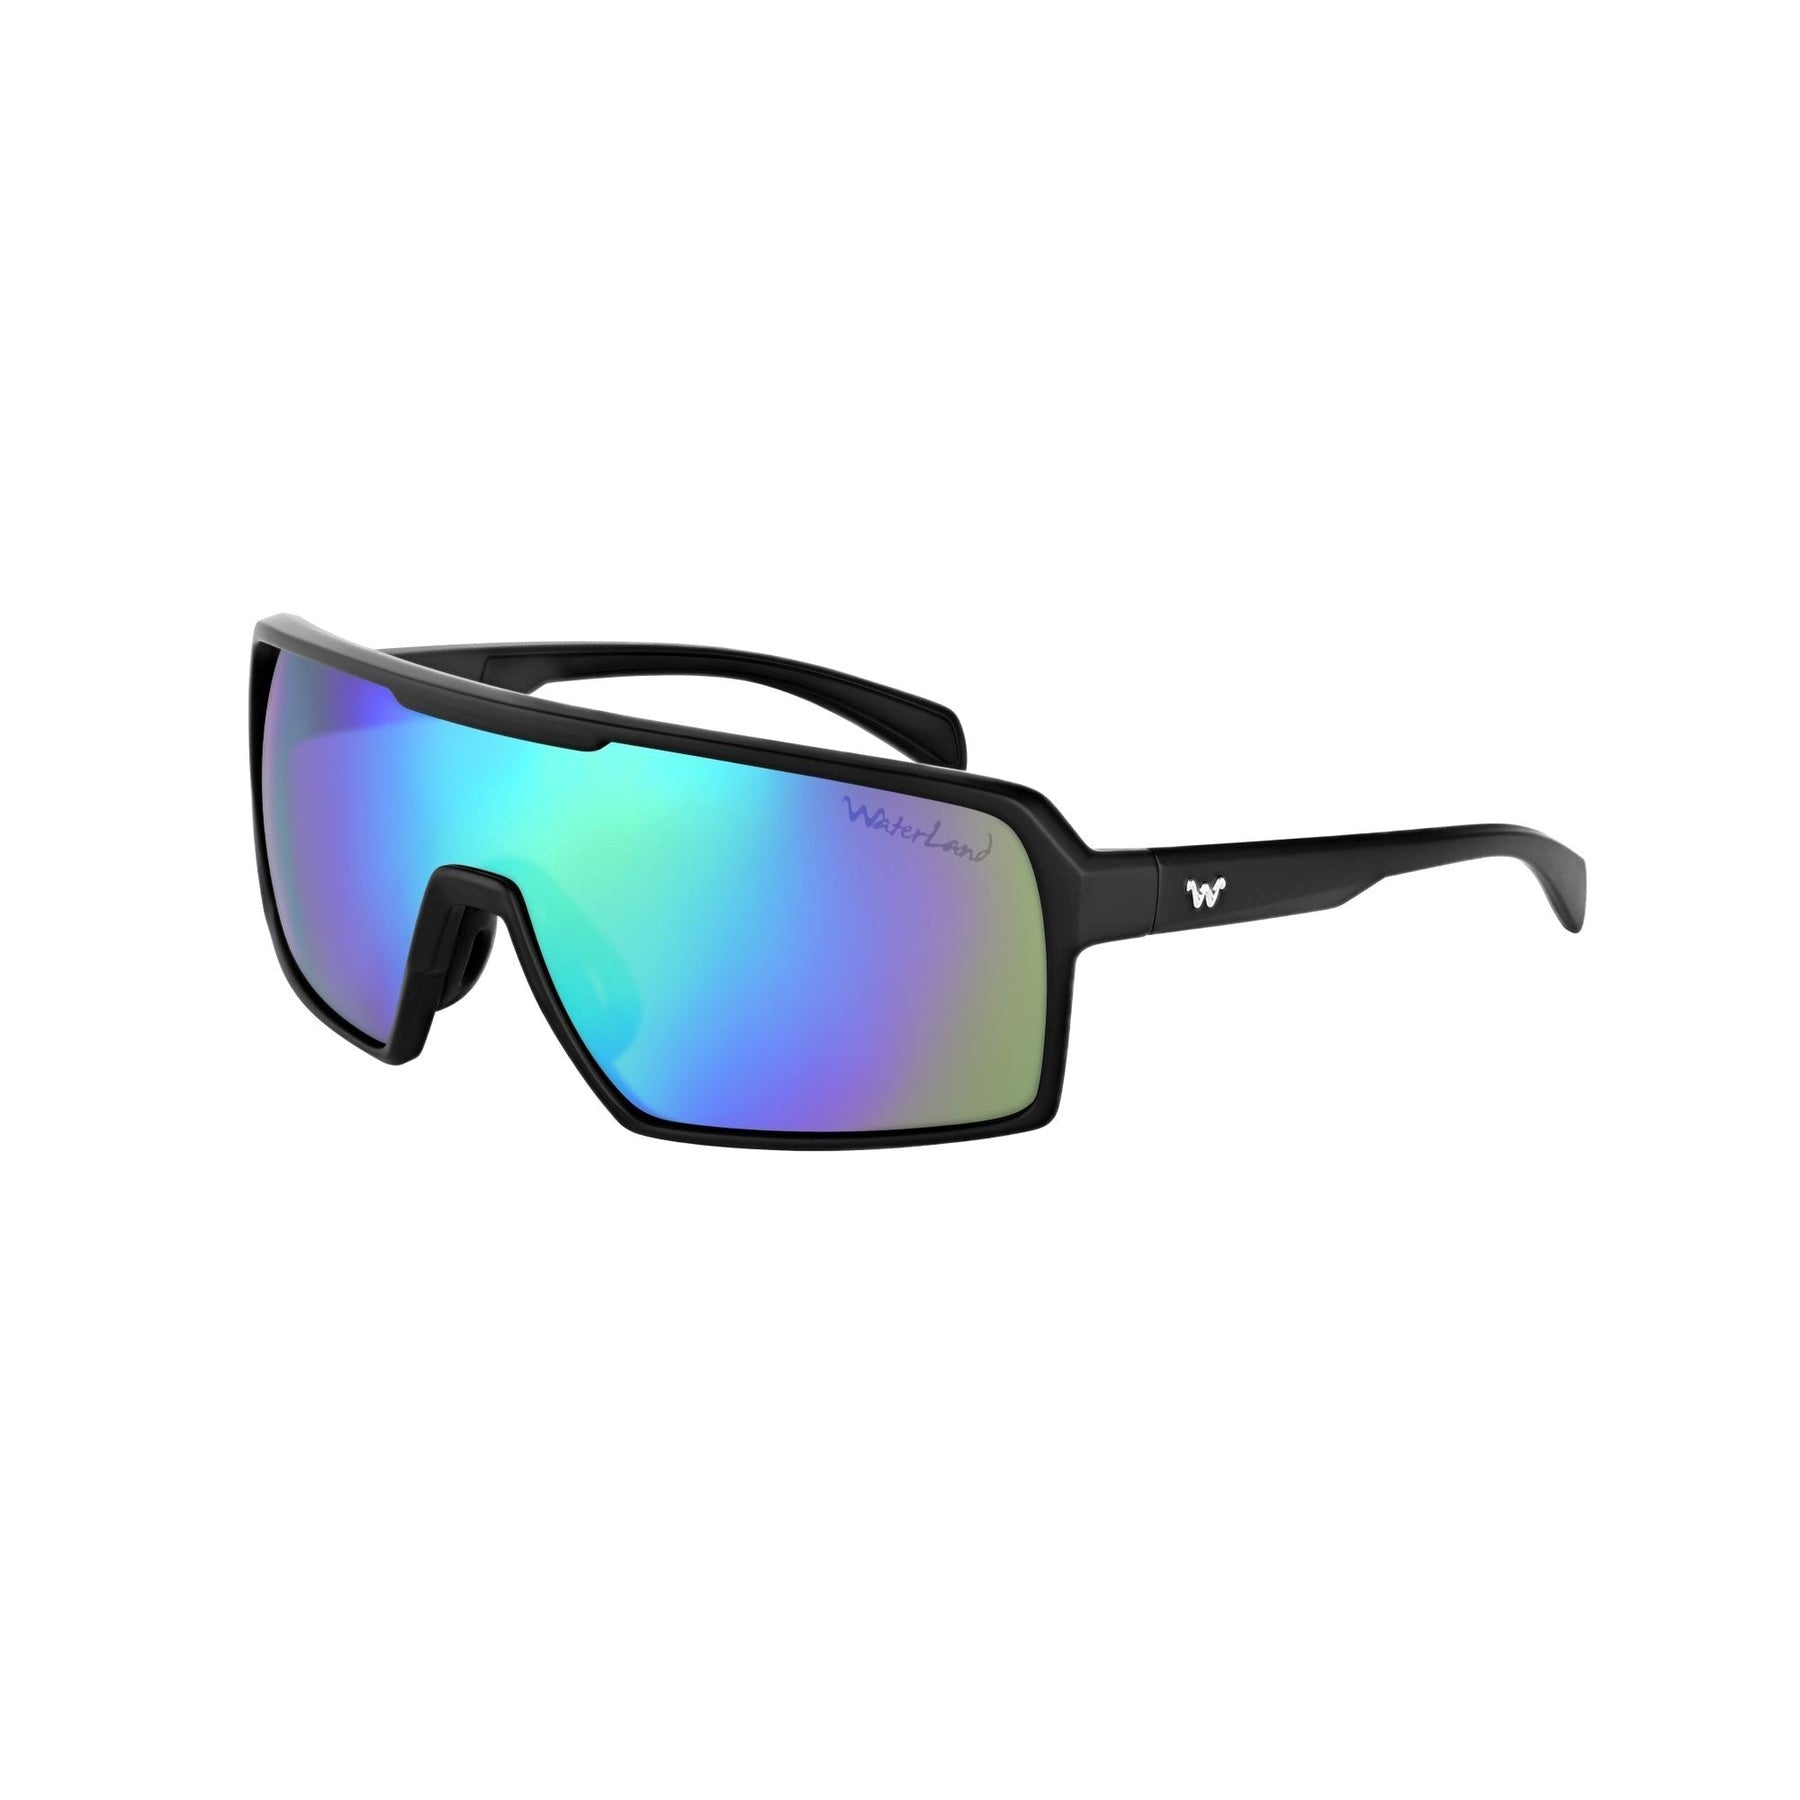 Waterland Catchenm Polarized Sunglasses